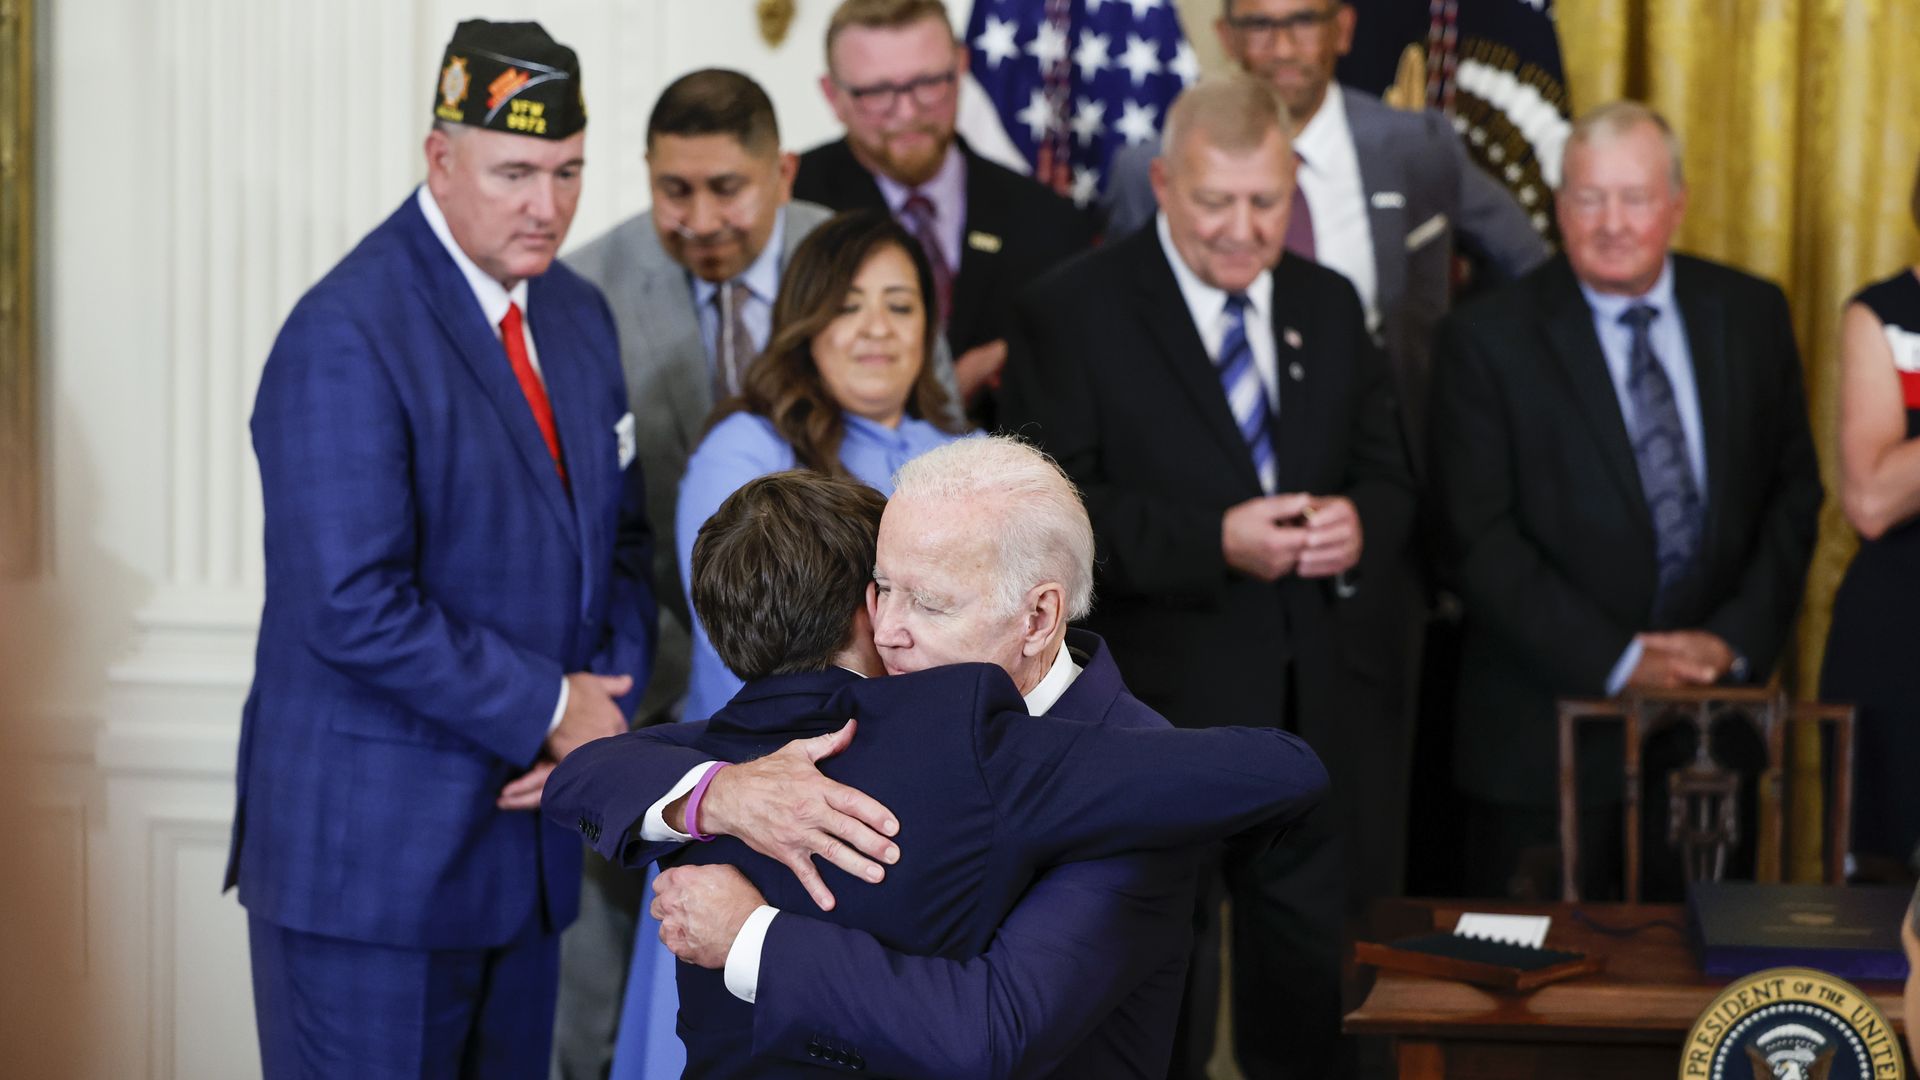 Biden embracing his grandson